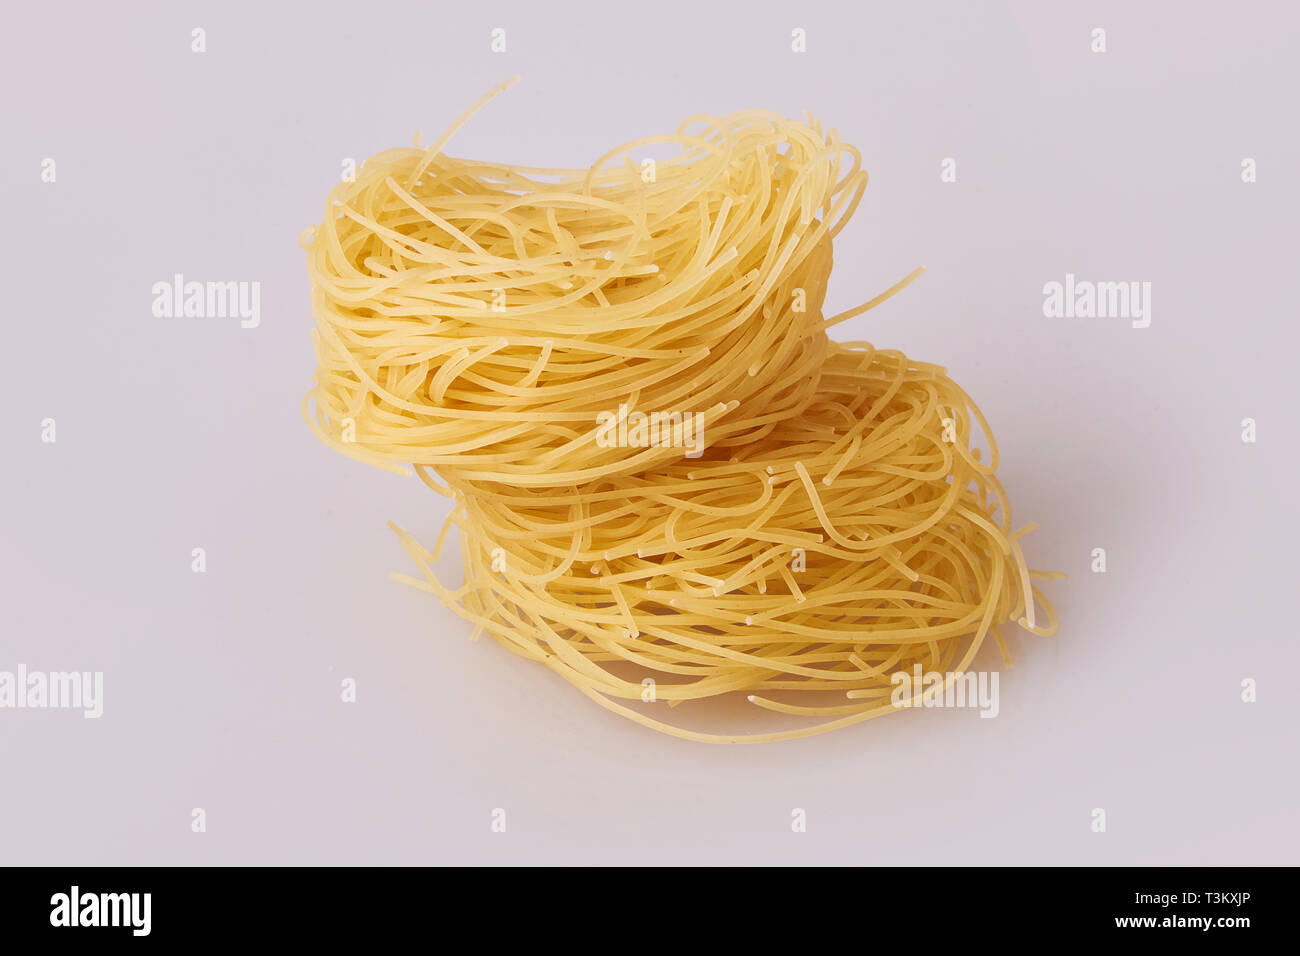 Capelli d'angelo, Angel's hair - pasta.  Homemade pasta. Italian Cuisine. Egg noodles. Italian pasta tagliatelle nest isolated Stock Photo